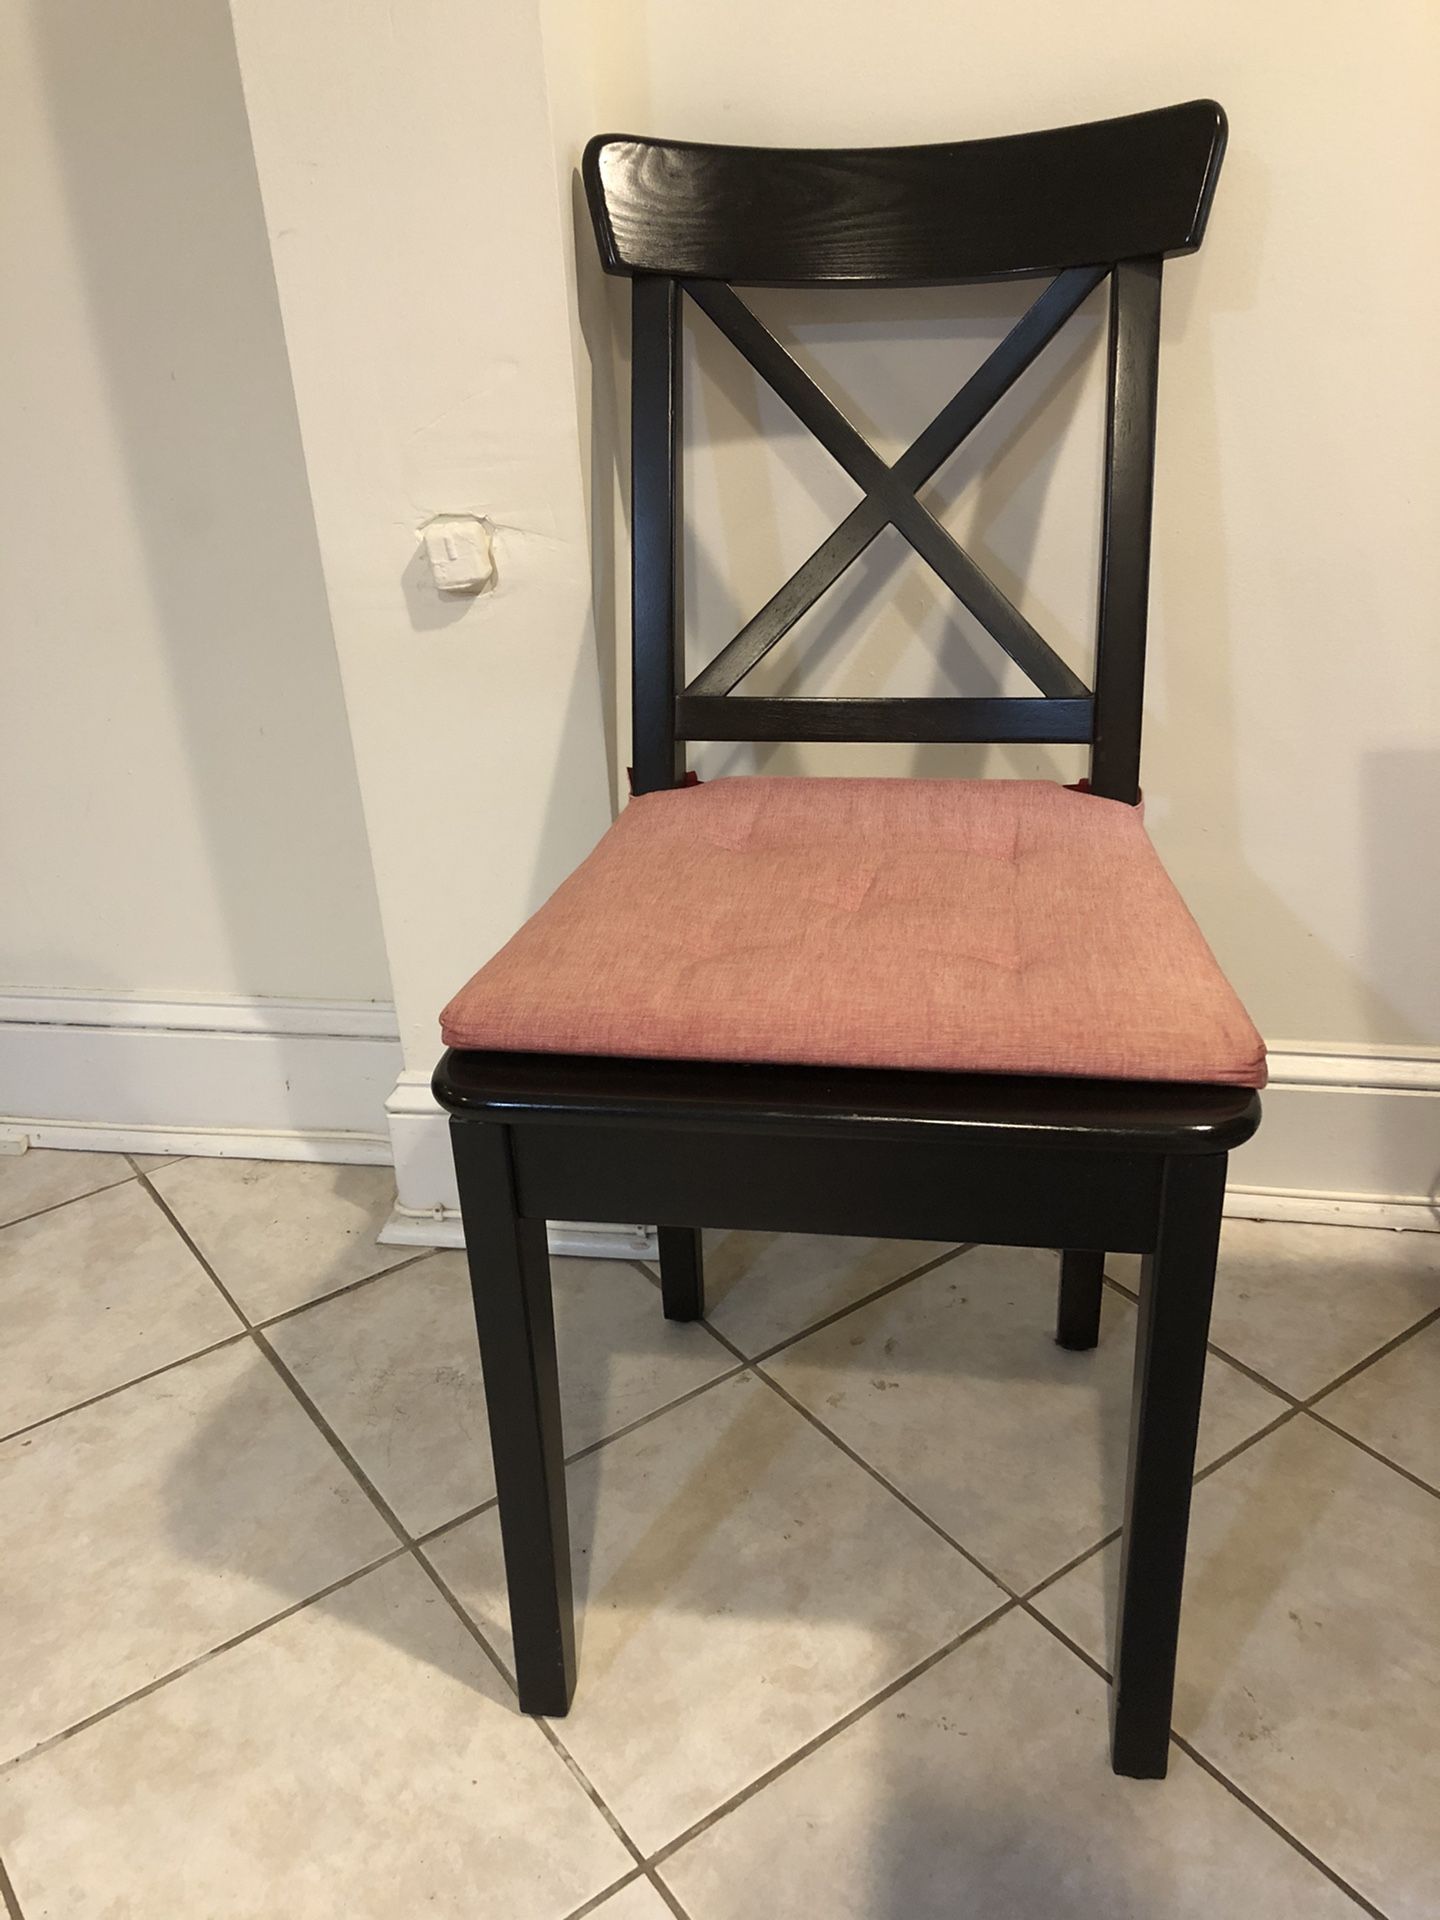 FREE Chair—needs repair